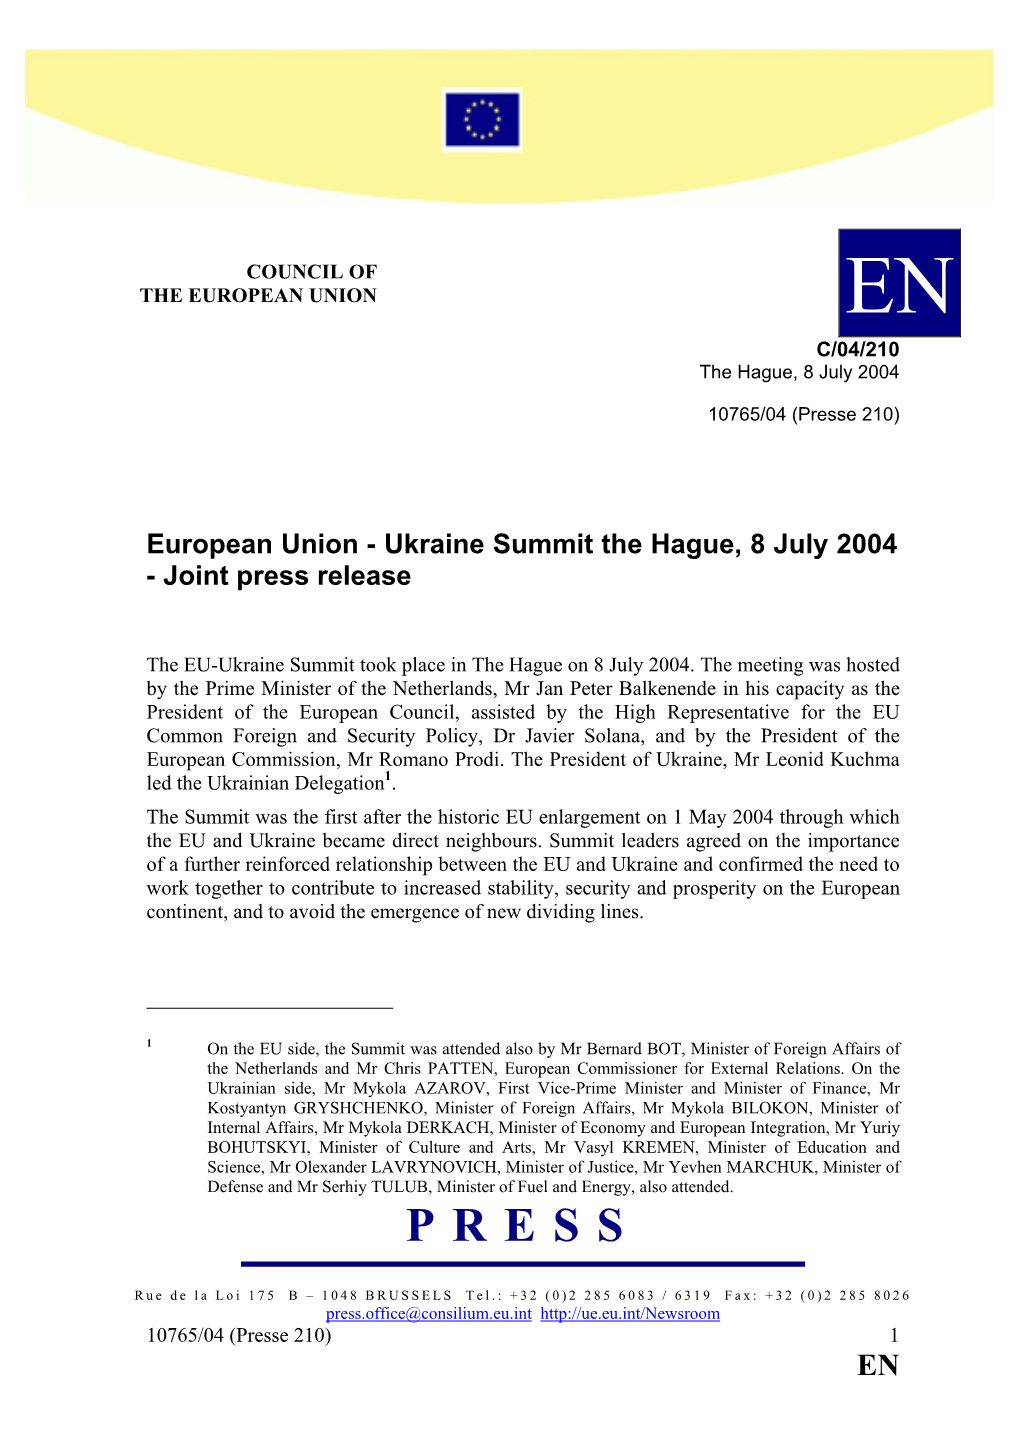 Ukraine Summit the Hague, 8 July 2004 - Joint Press Release